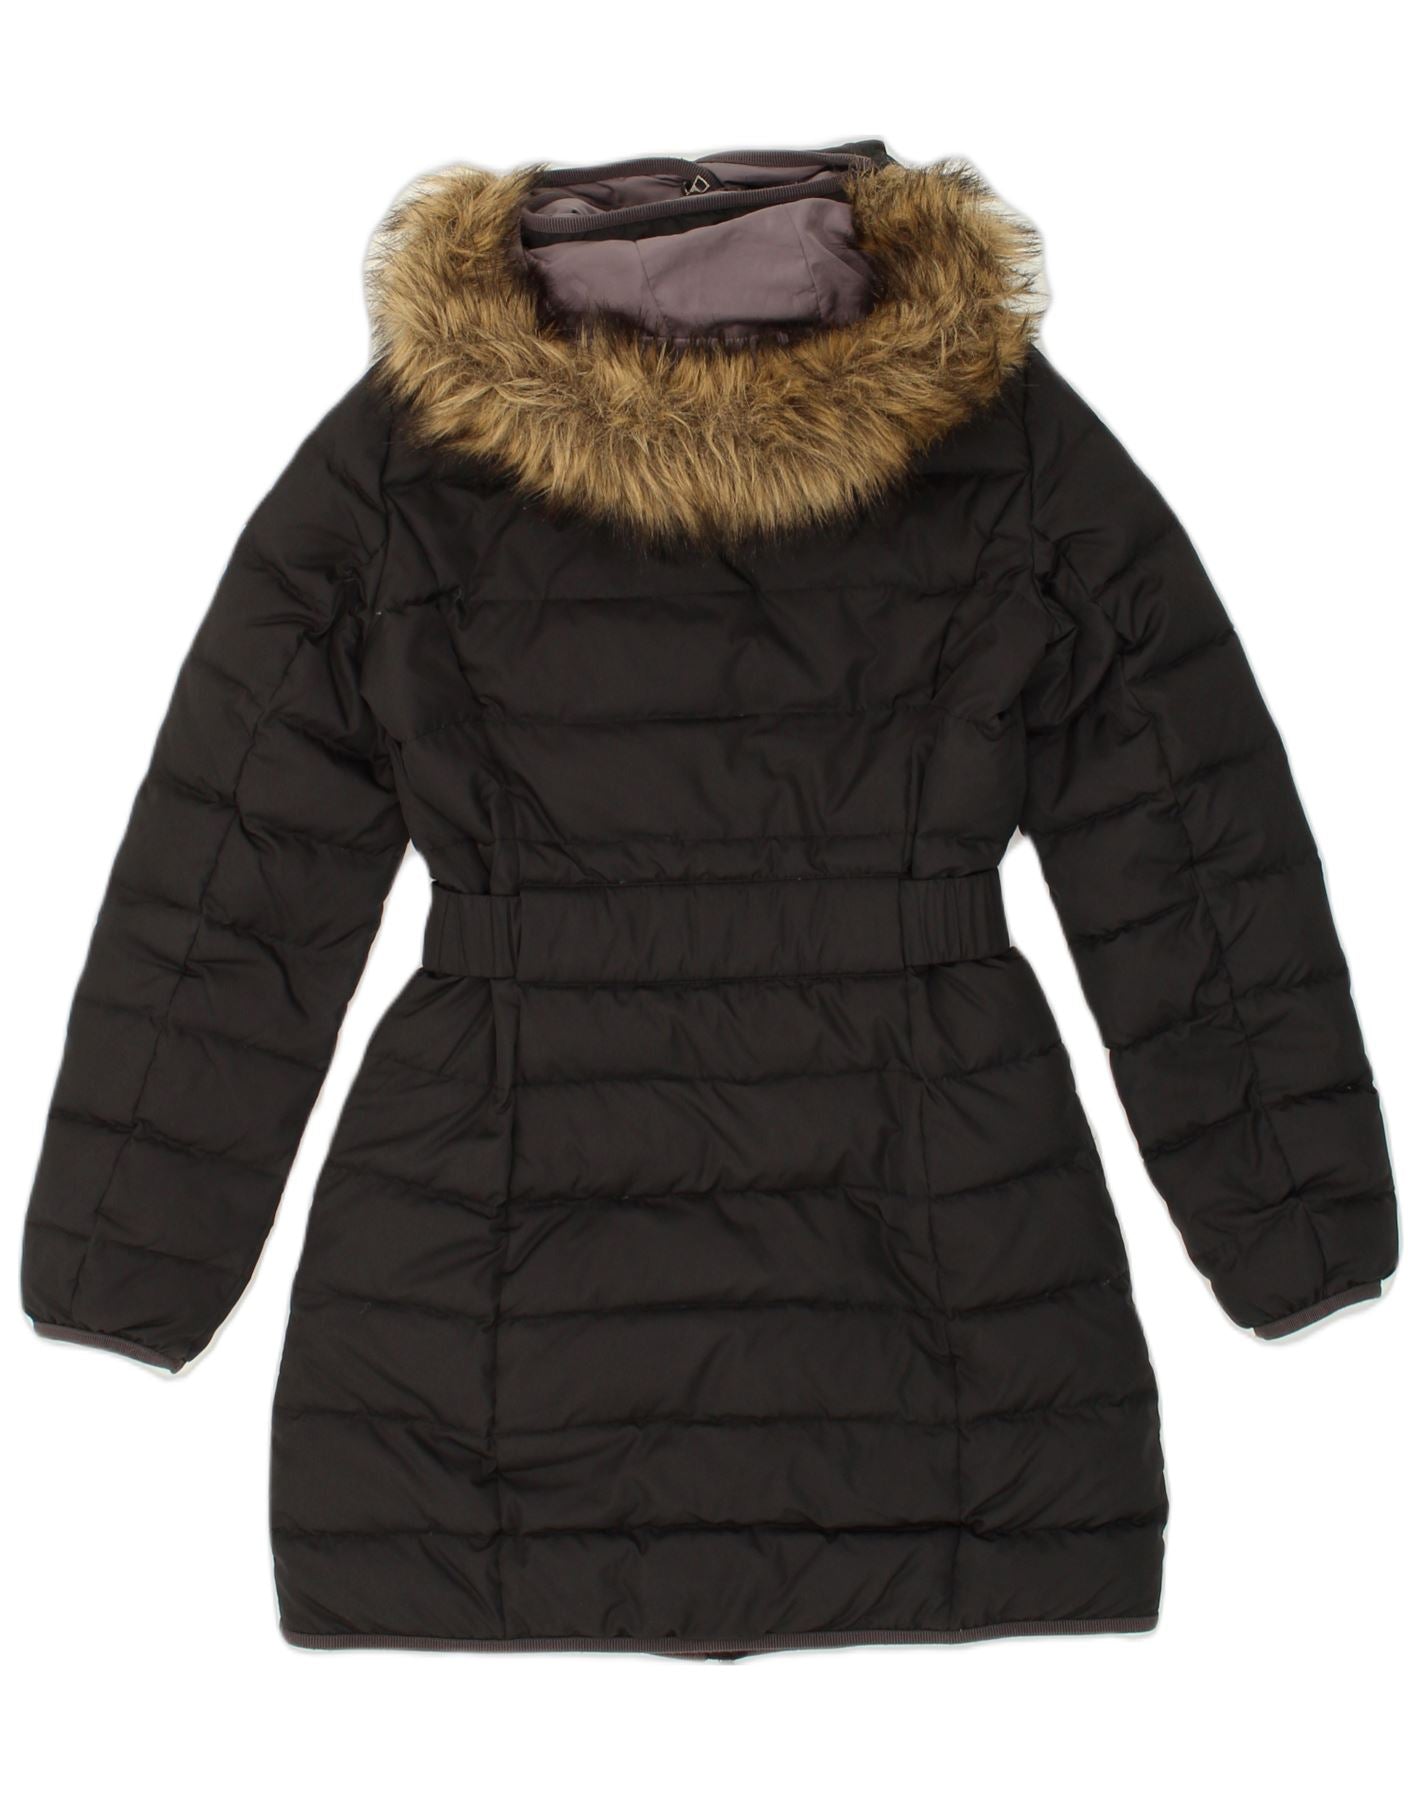 Buy Esprit Quilted Coat Black - Scandinavian Fashion Store